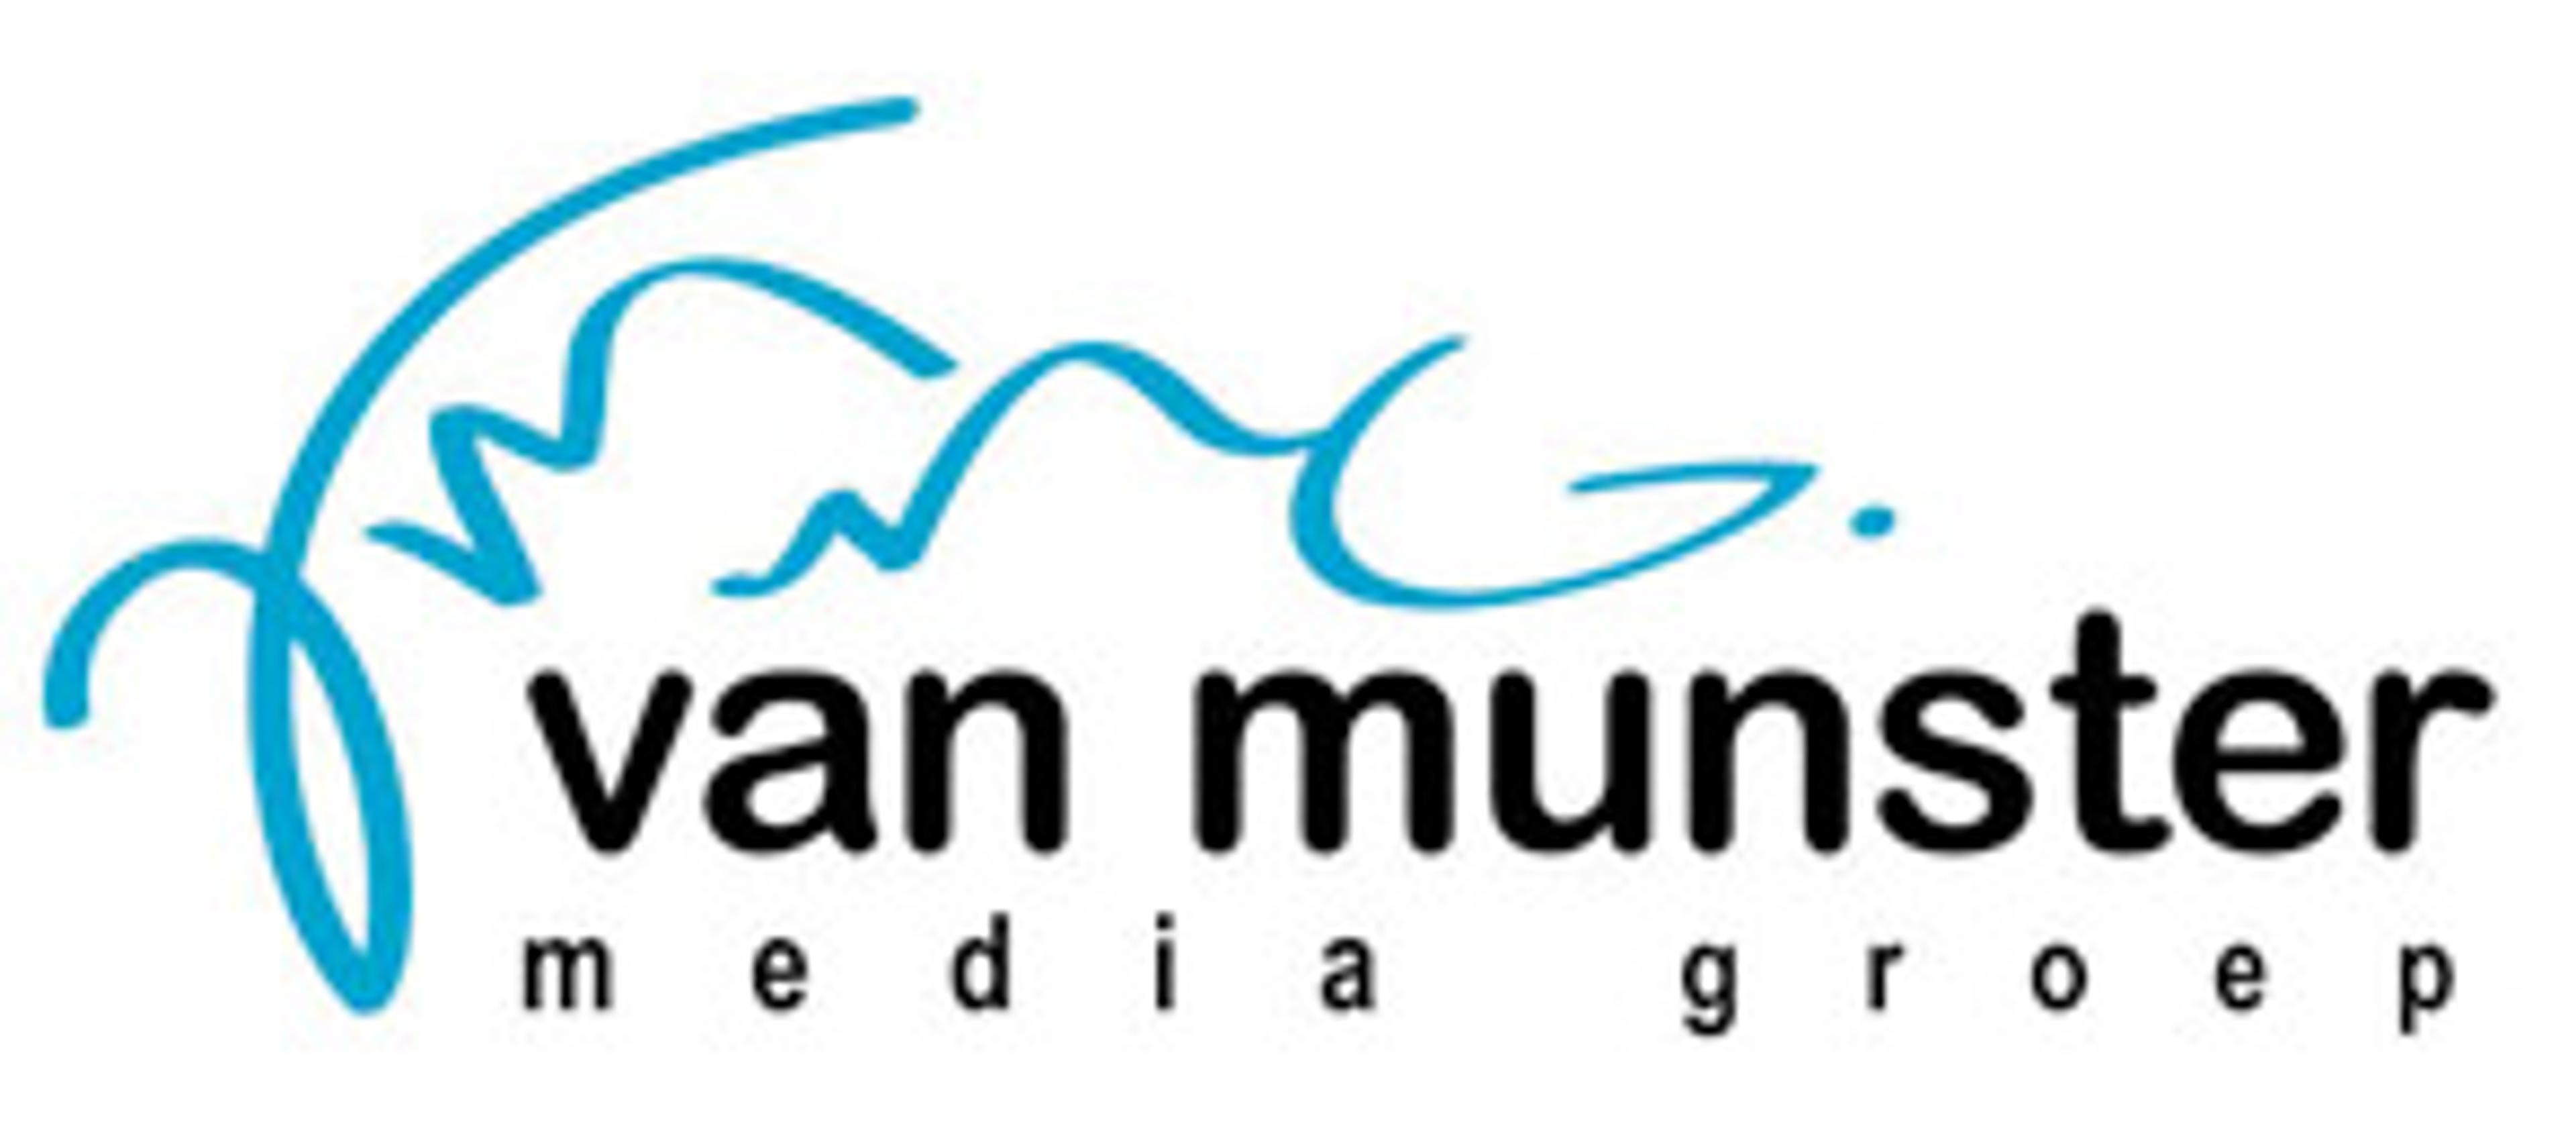 Van Munster Media BV neemt Sports Media Corp. over